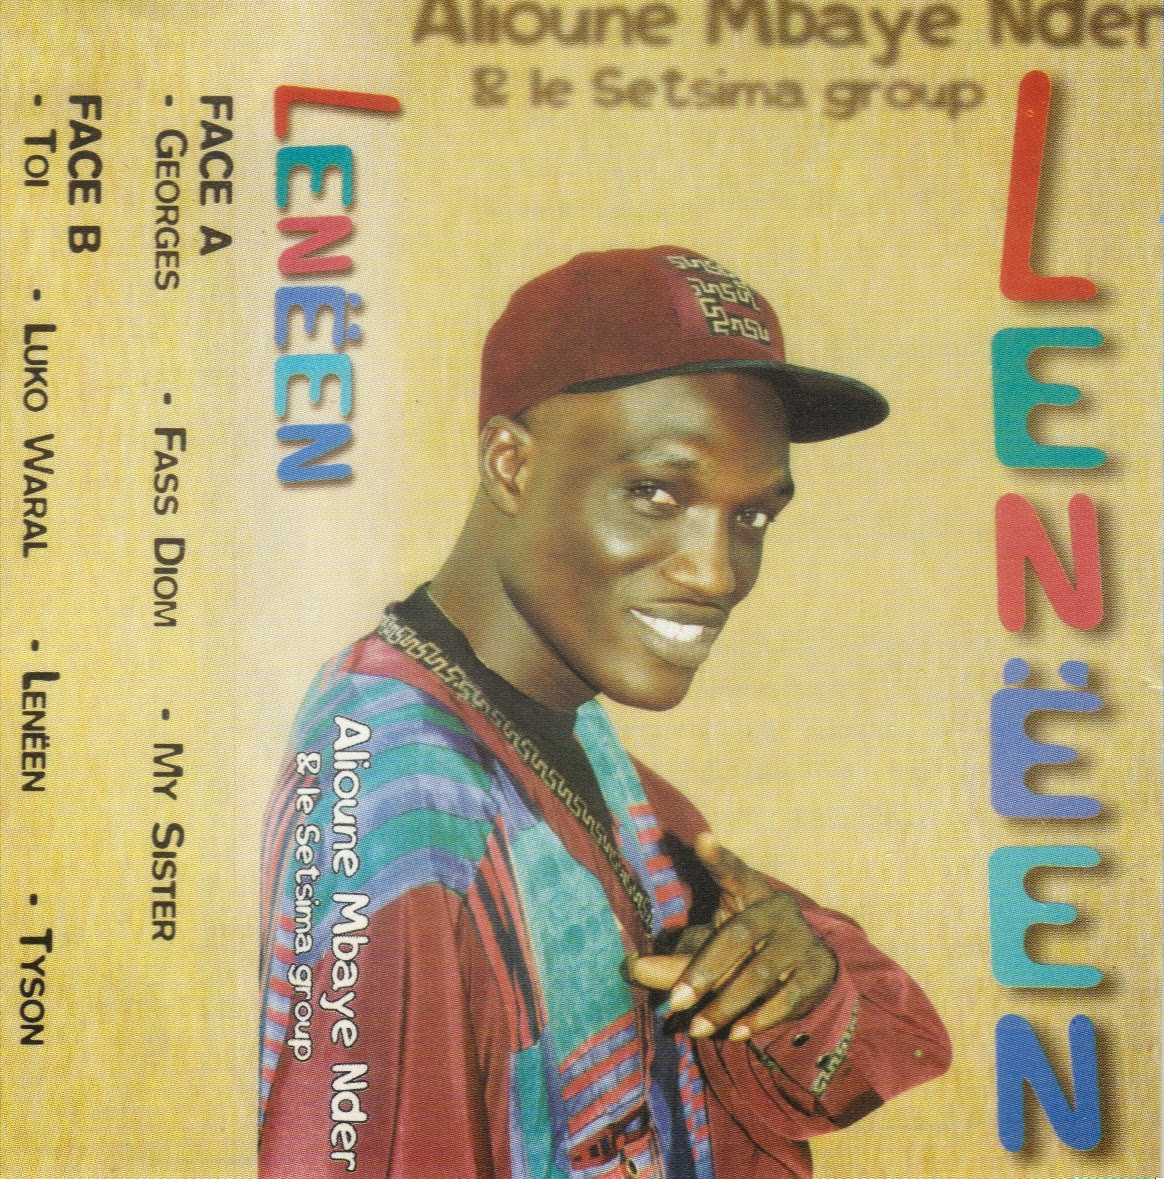  Alioune Mbaye Nder & Le Setsima Group - Lenëen Cover+2